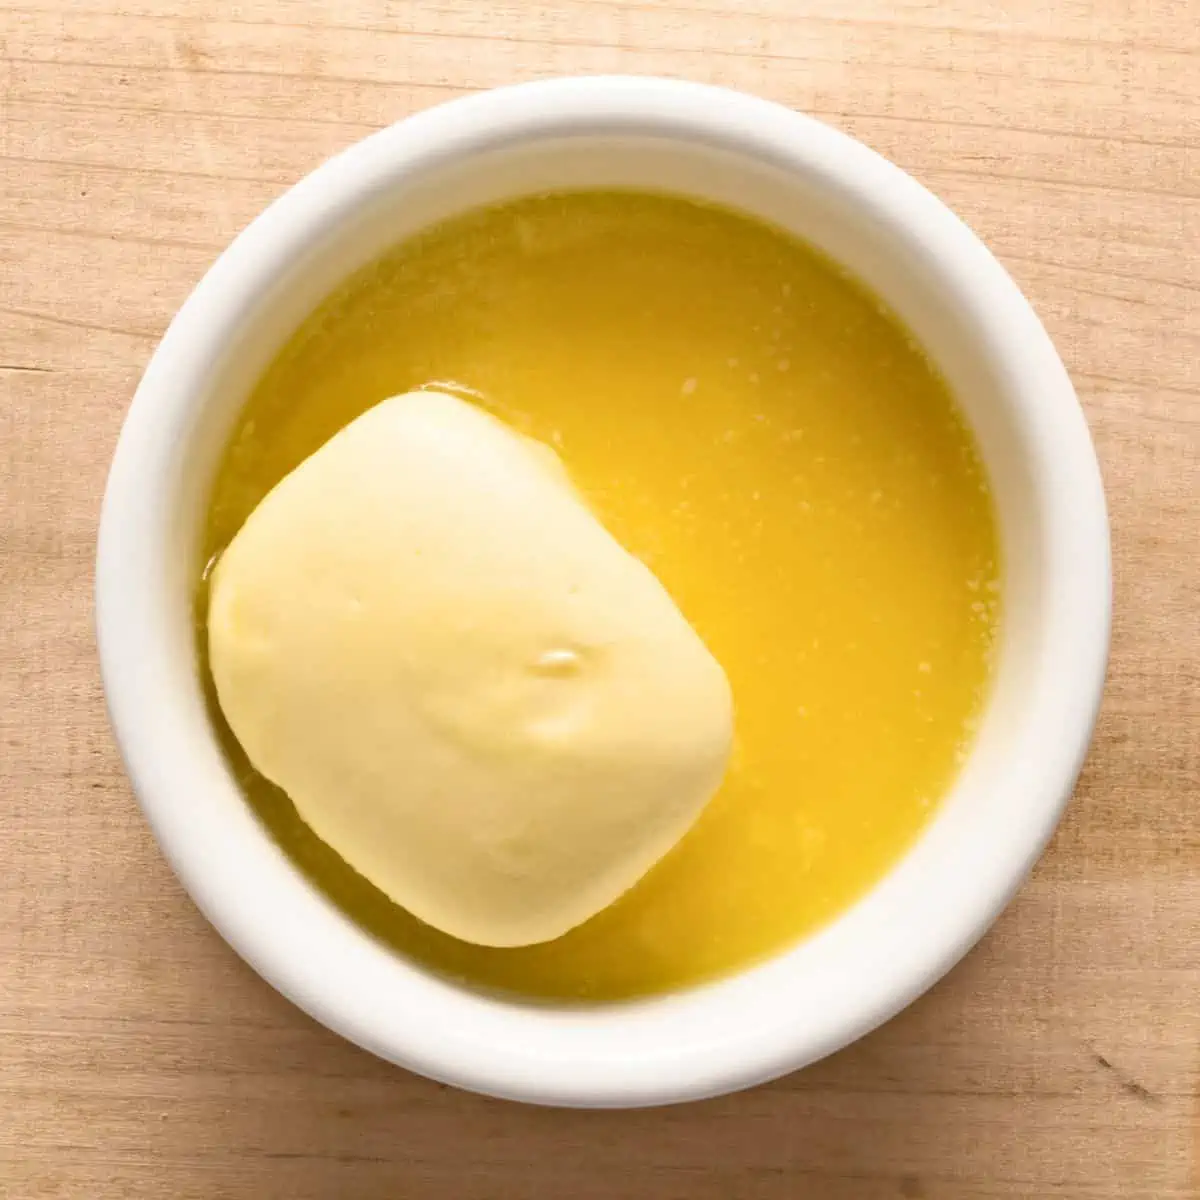 Melting butter in small white ramekin. 
